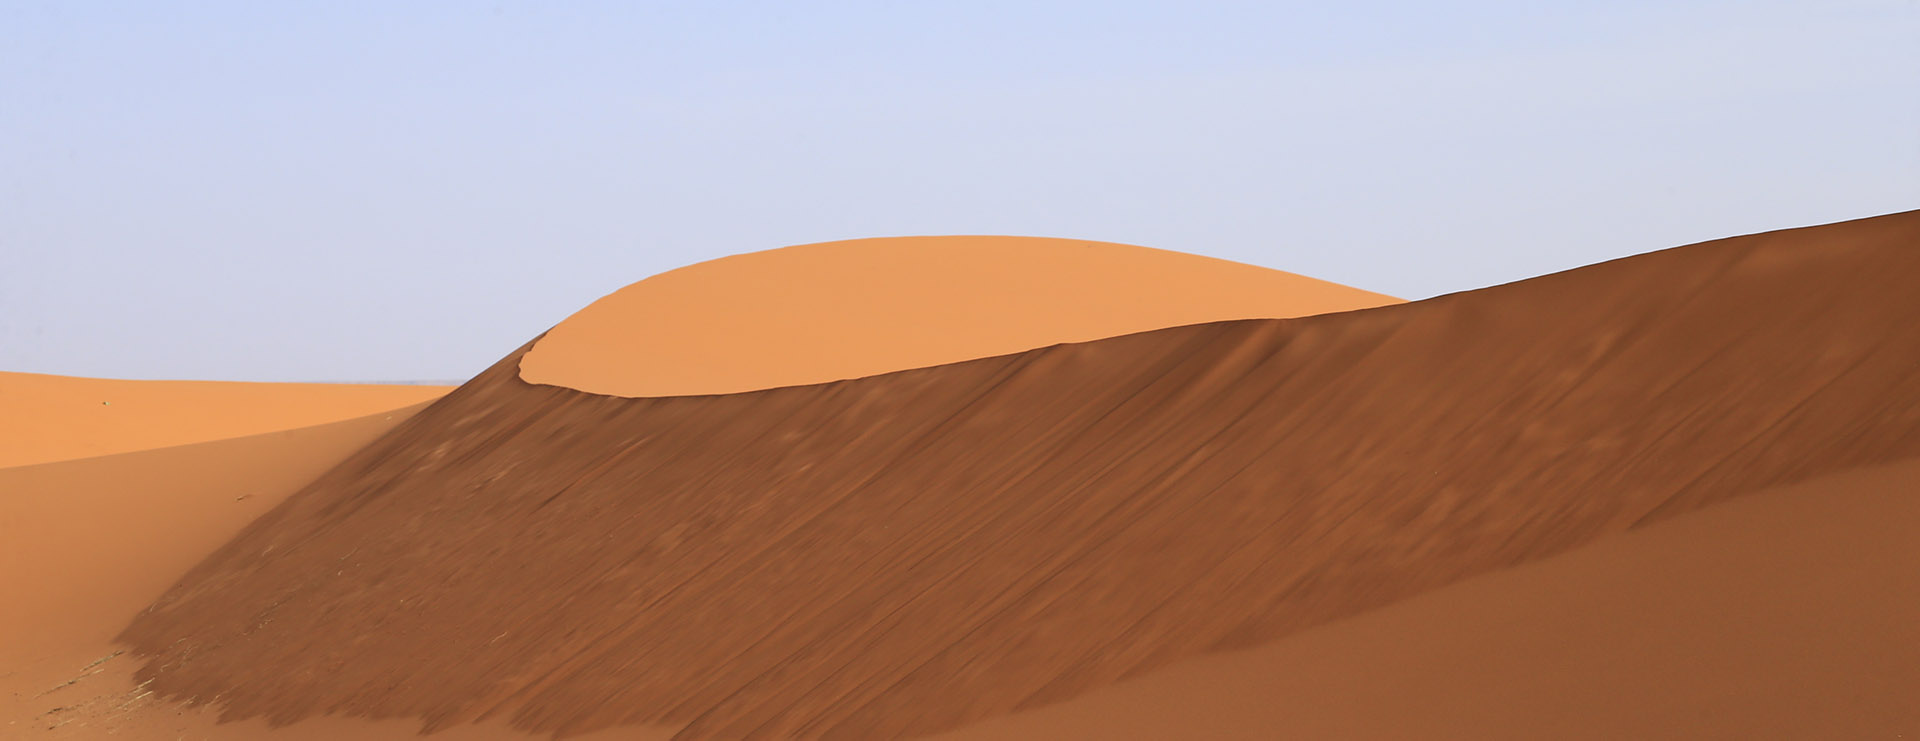 Al Masandoïa | Le bivouac Magique dans les dunes